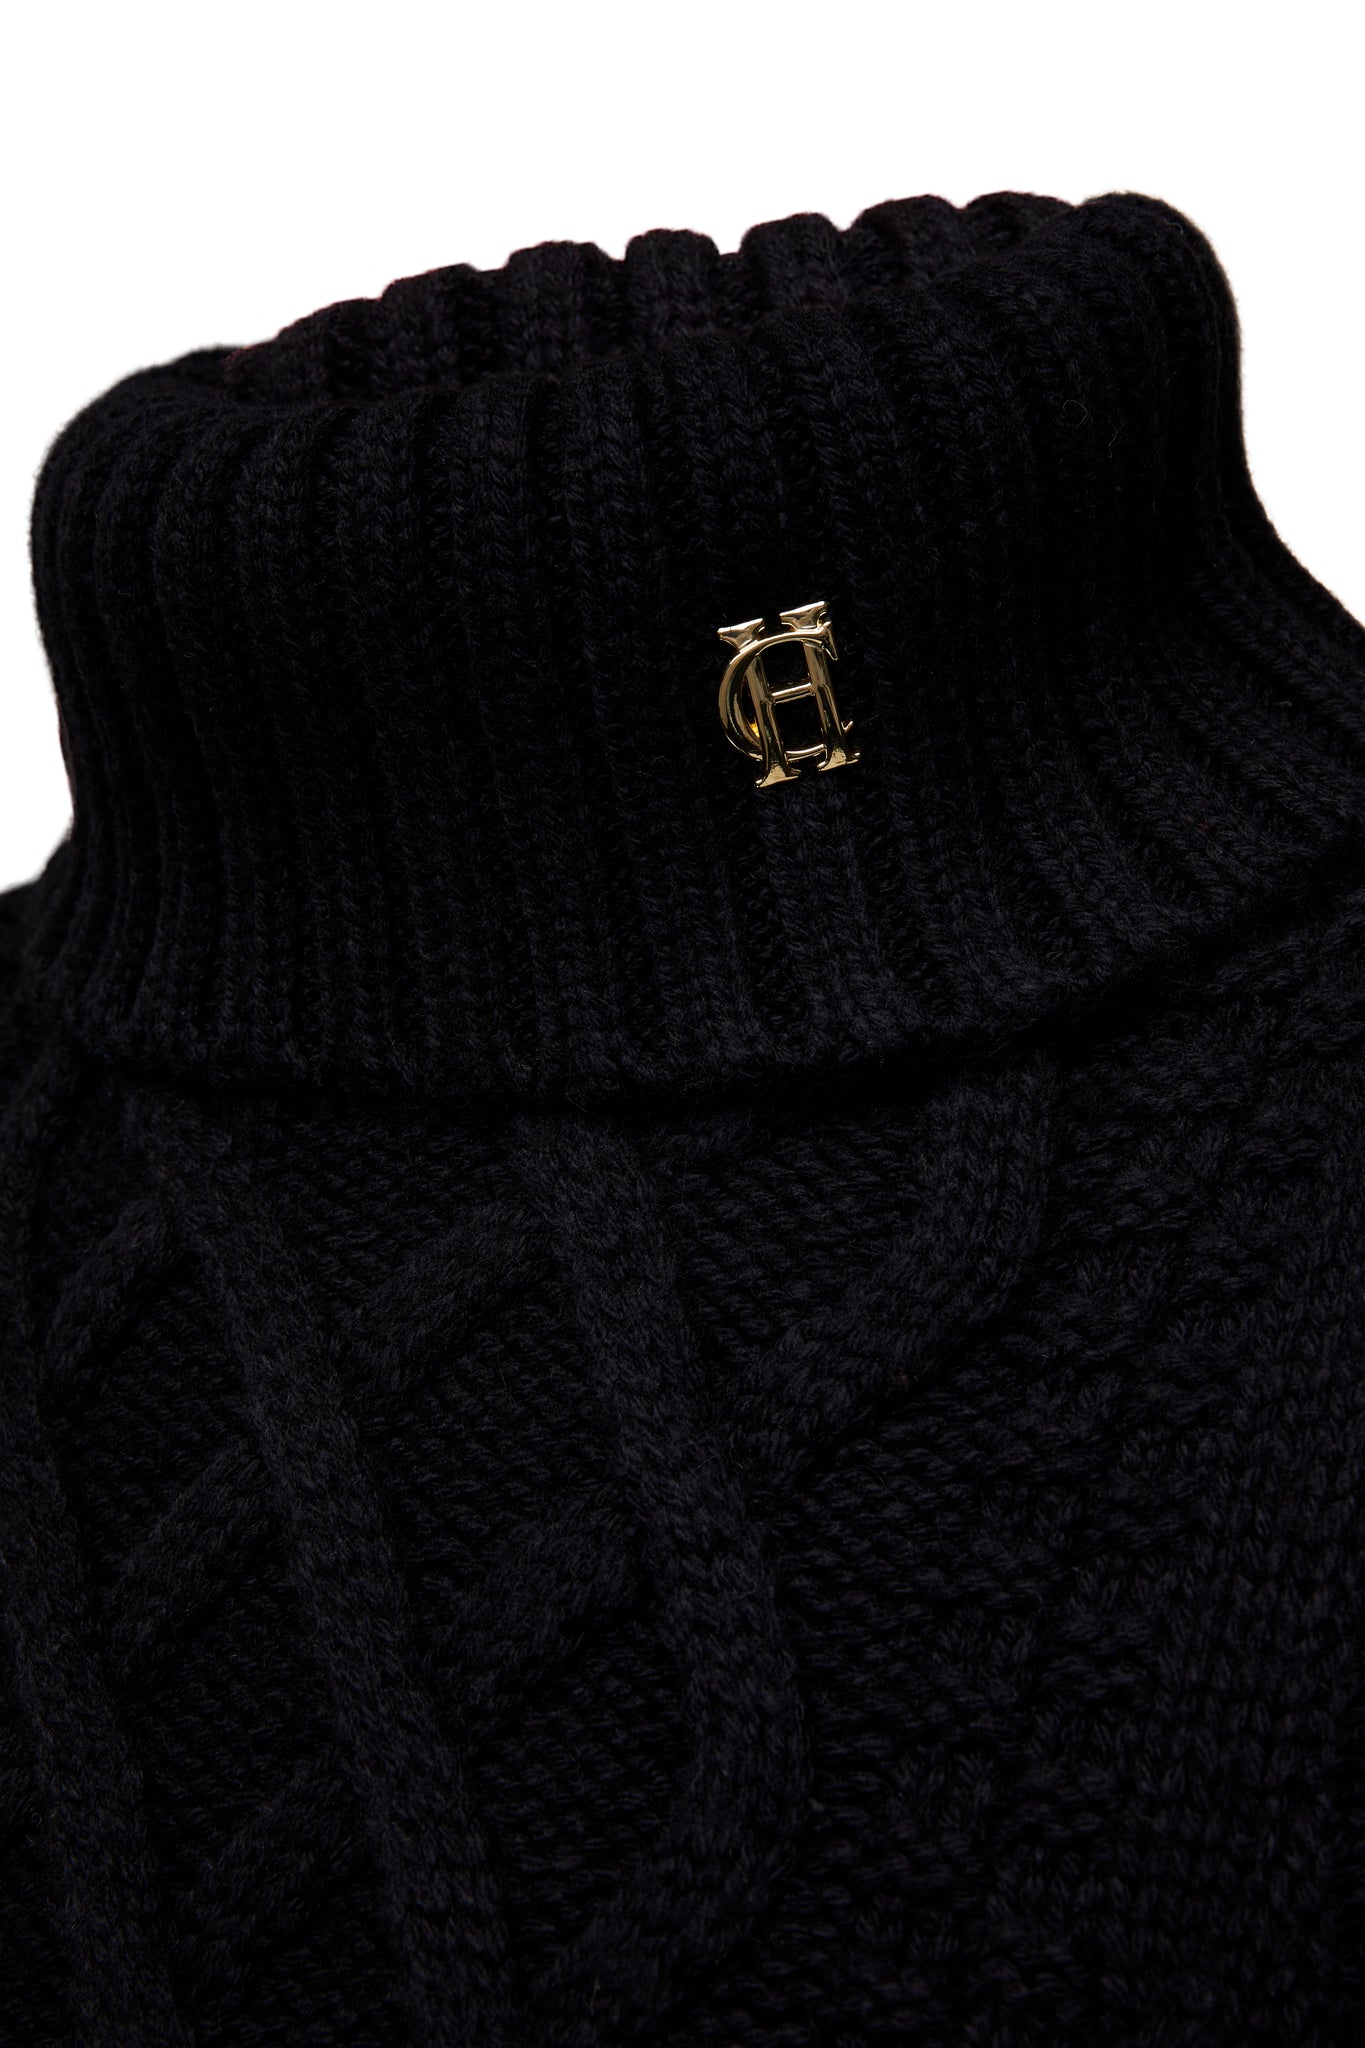 Sleeveless Knit (Black)